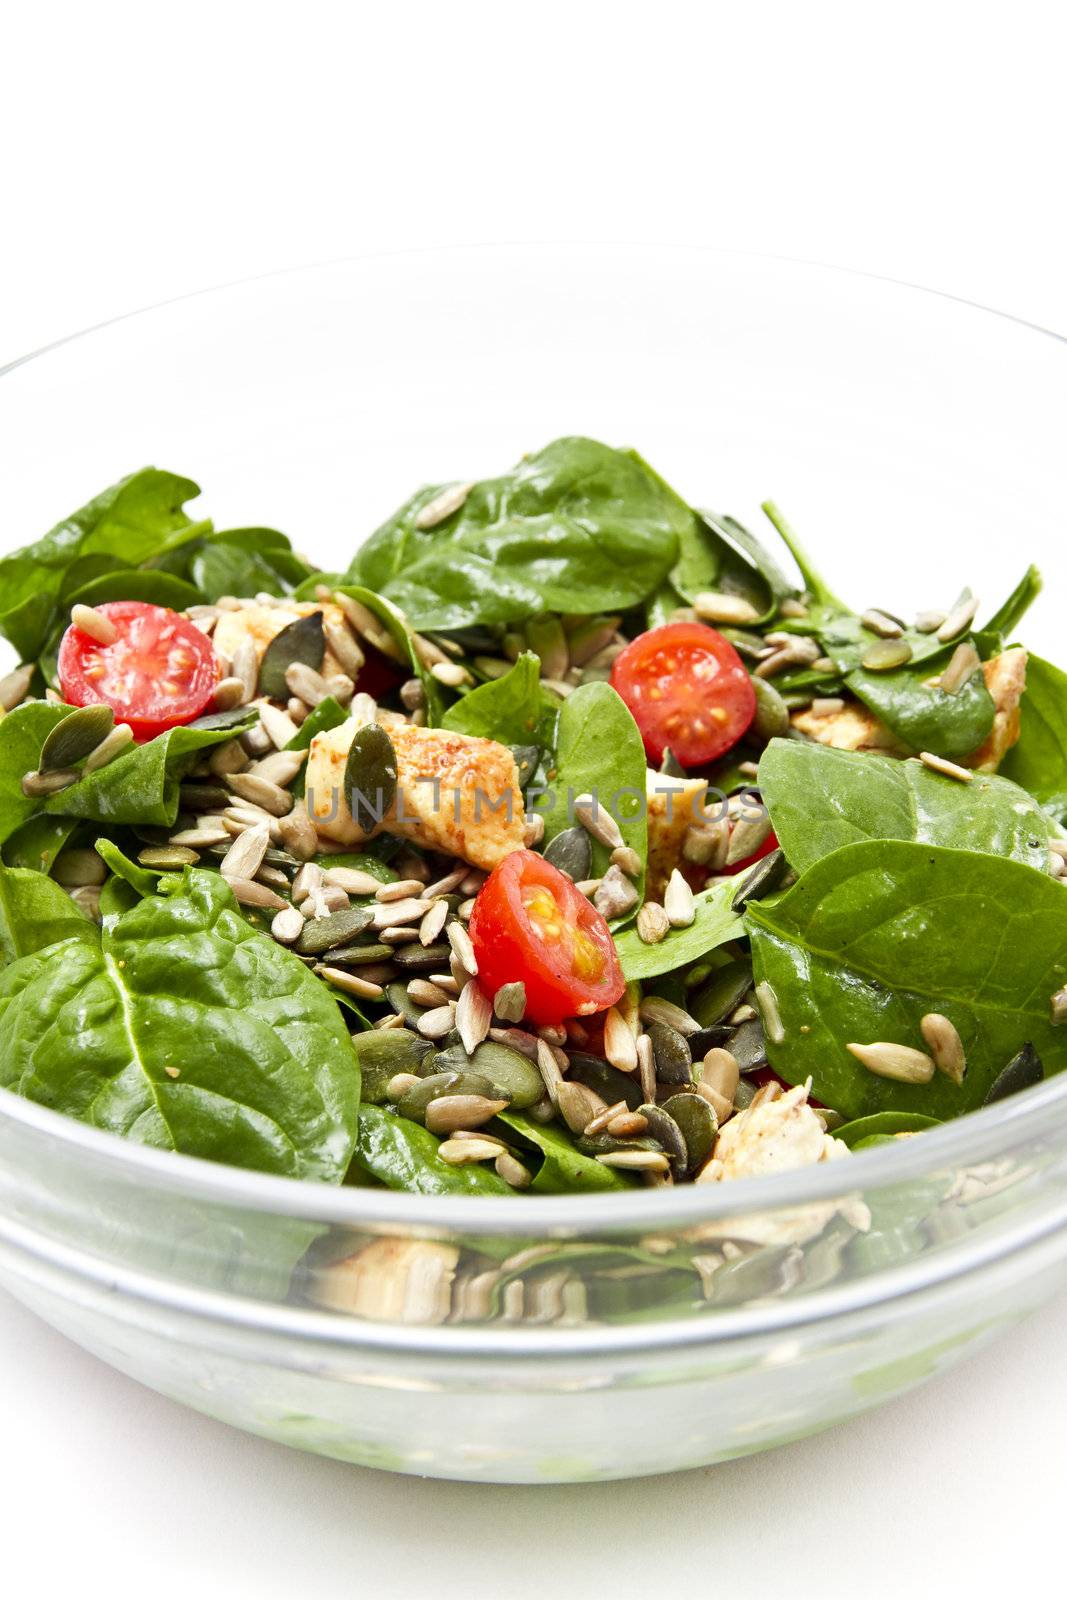 Spinach Salad by caldix